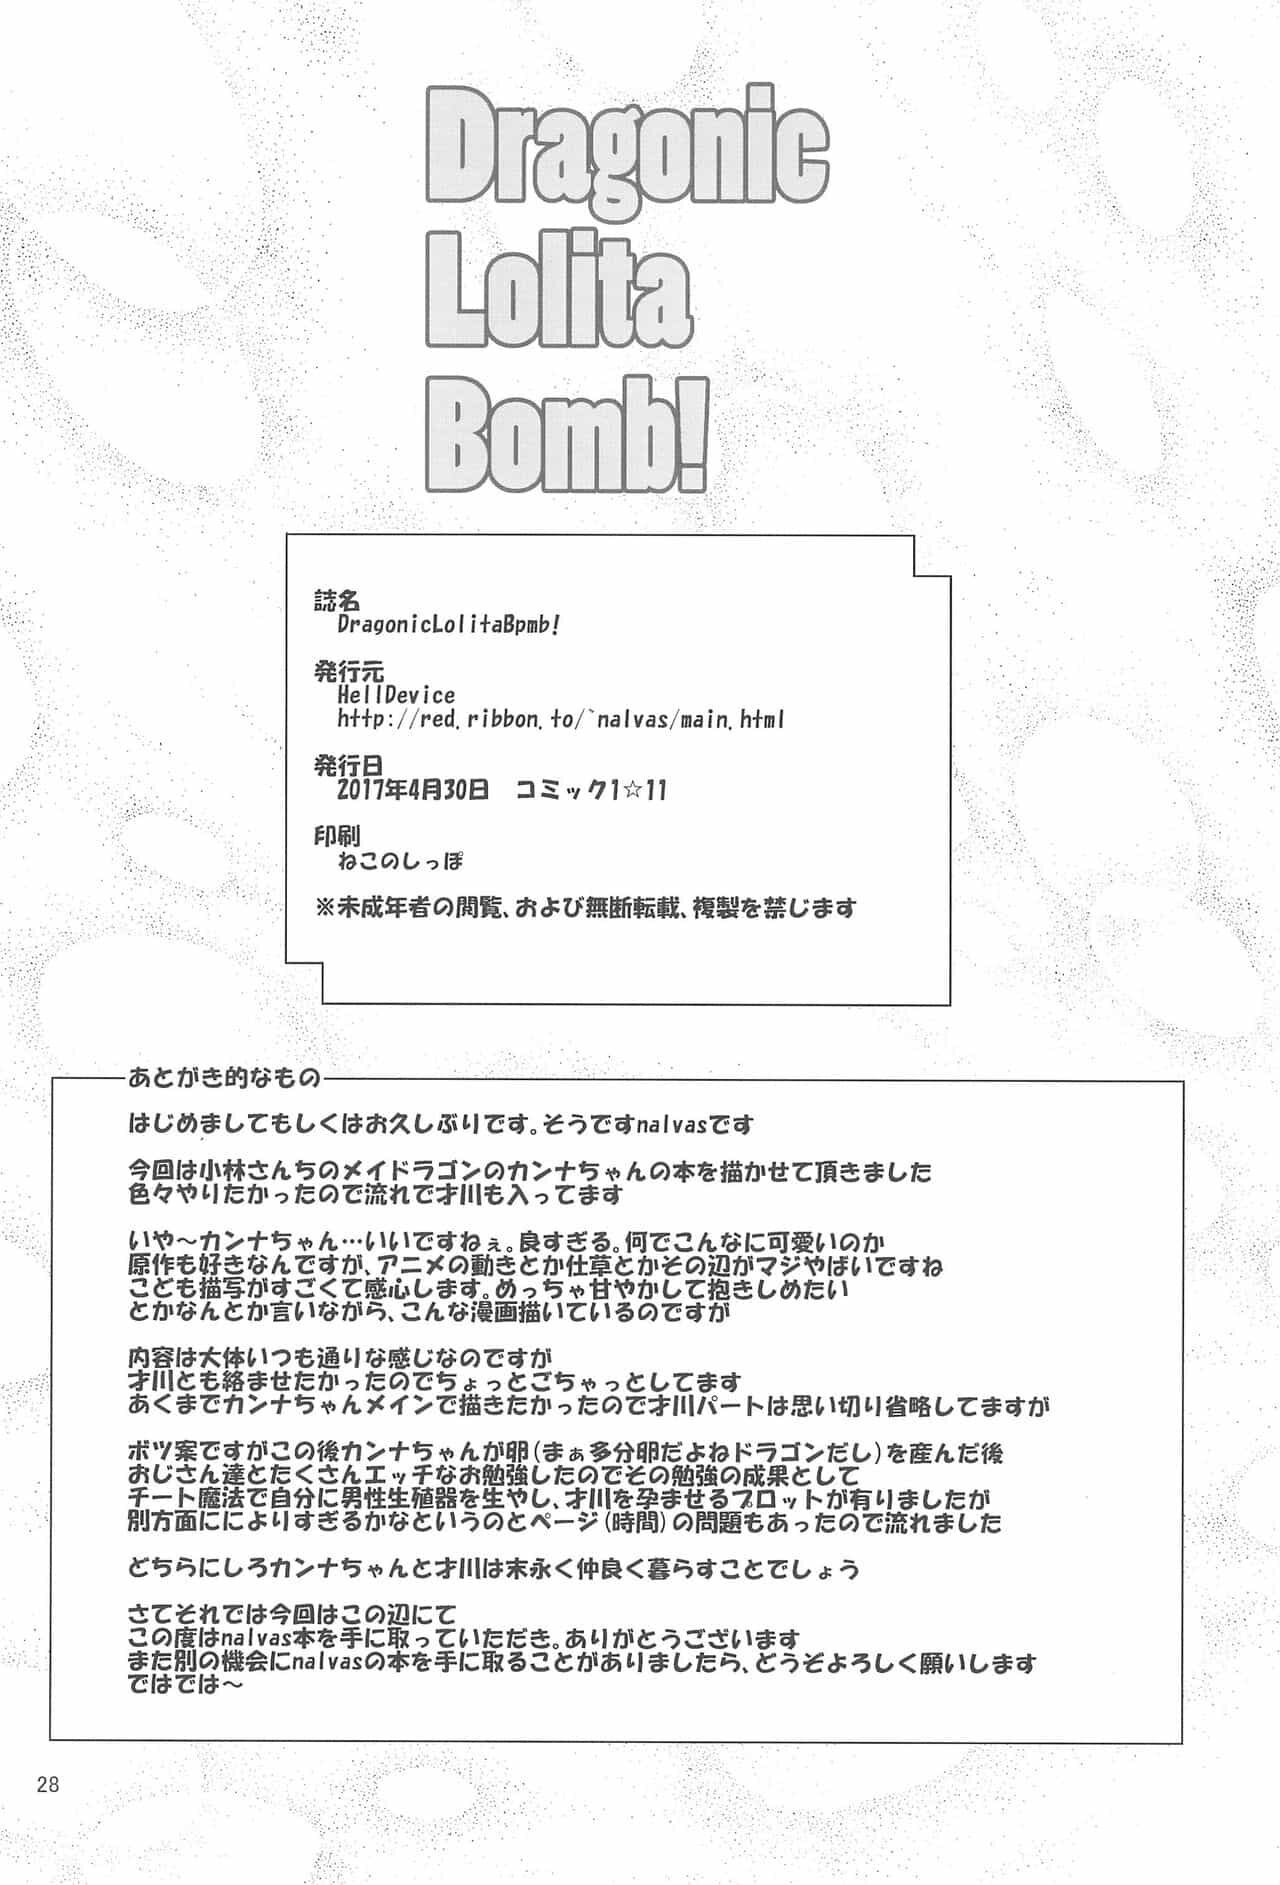 Dragonic Lolita Bomb! - 26